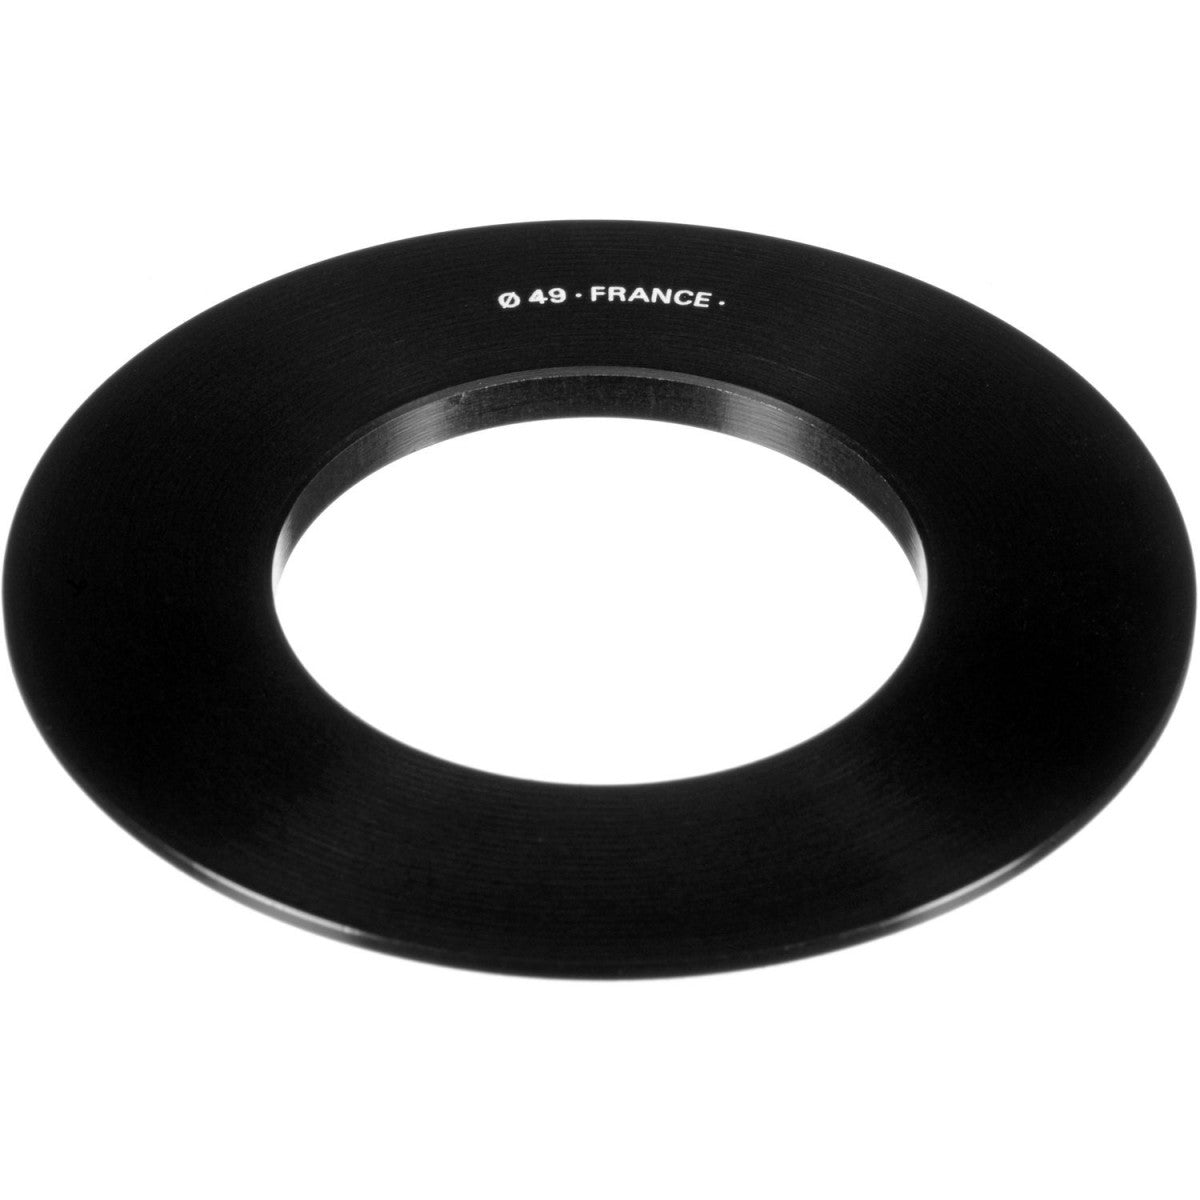 Cokin P Series Filter Holder Adapter Ring (49mm)